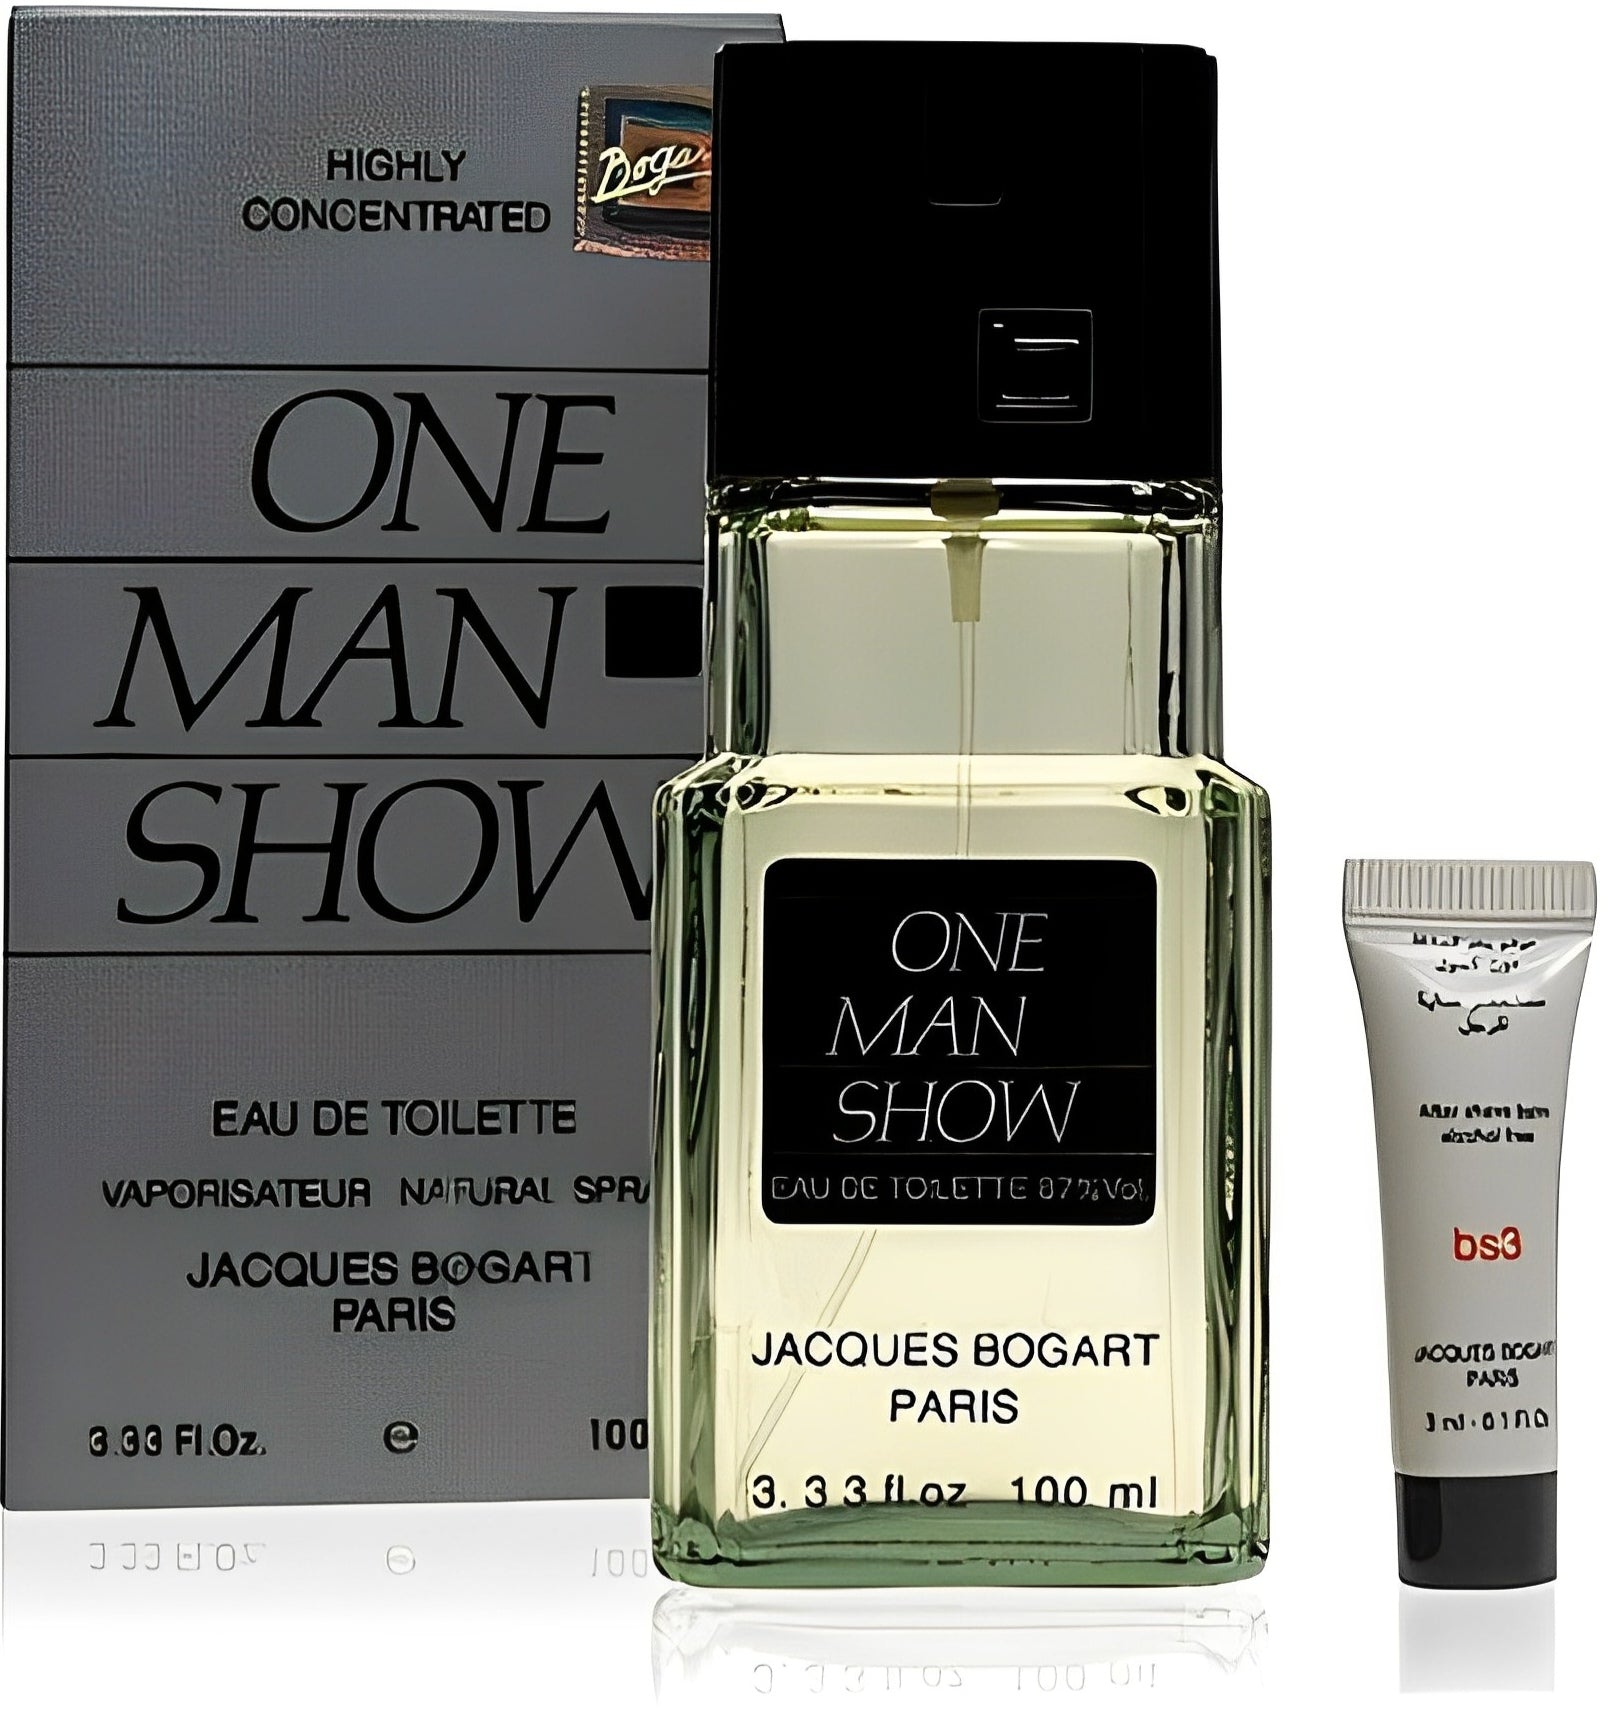 One man show men 100ml EDT. One man show туалетная вода 100 мл.. One man show 100ml EDT M. Jacques Bogart one man show, 100 ml.